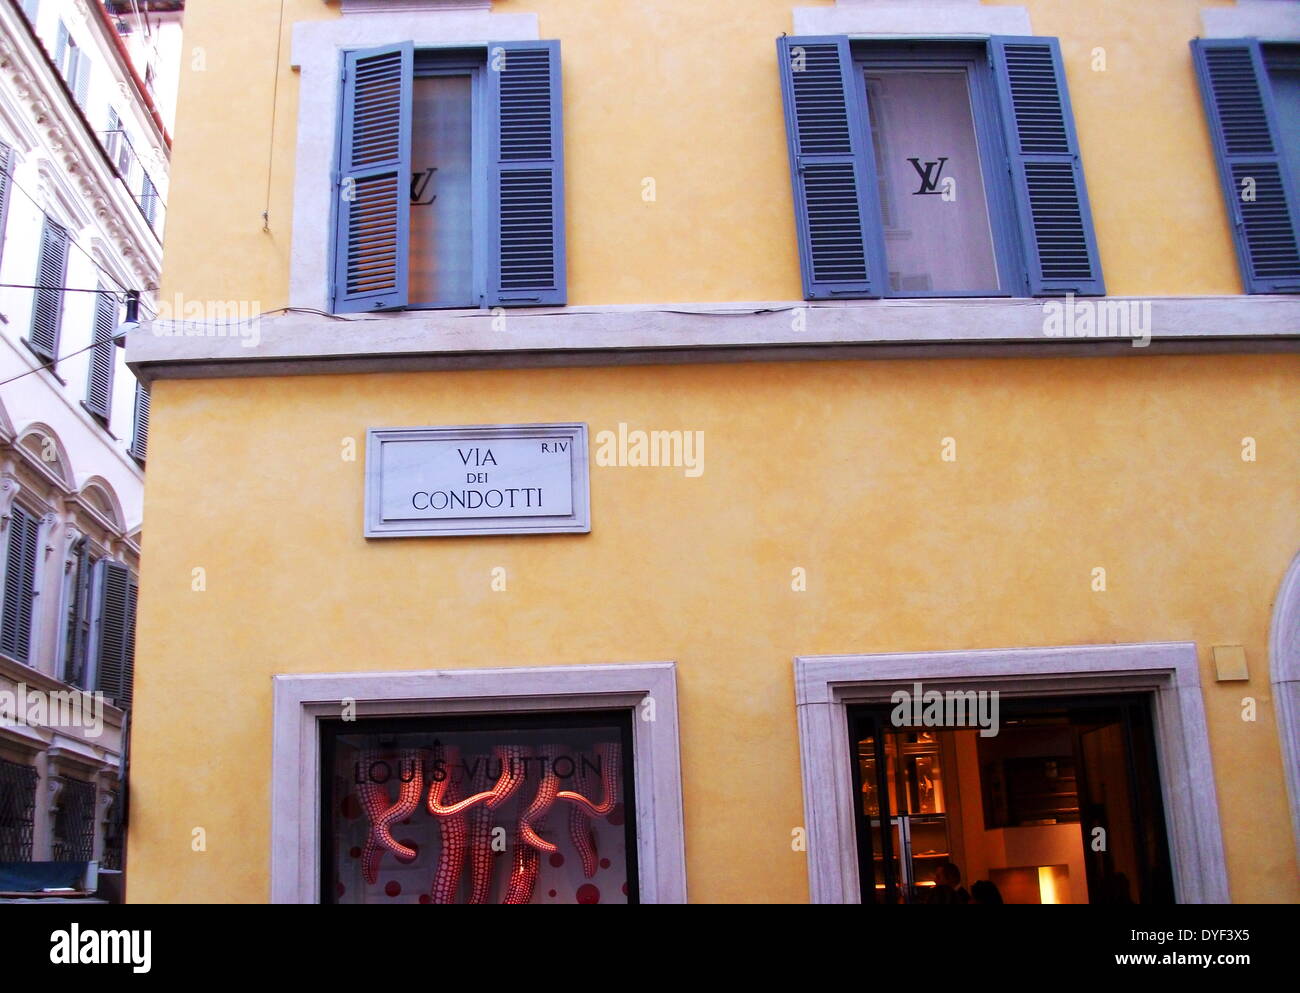 Louis Vuitton shop along Via dei Condotti street Tridente district Rome  Italy Europe Stock Photo - Alamy